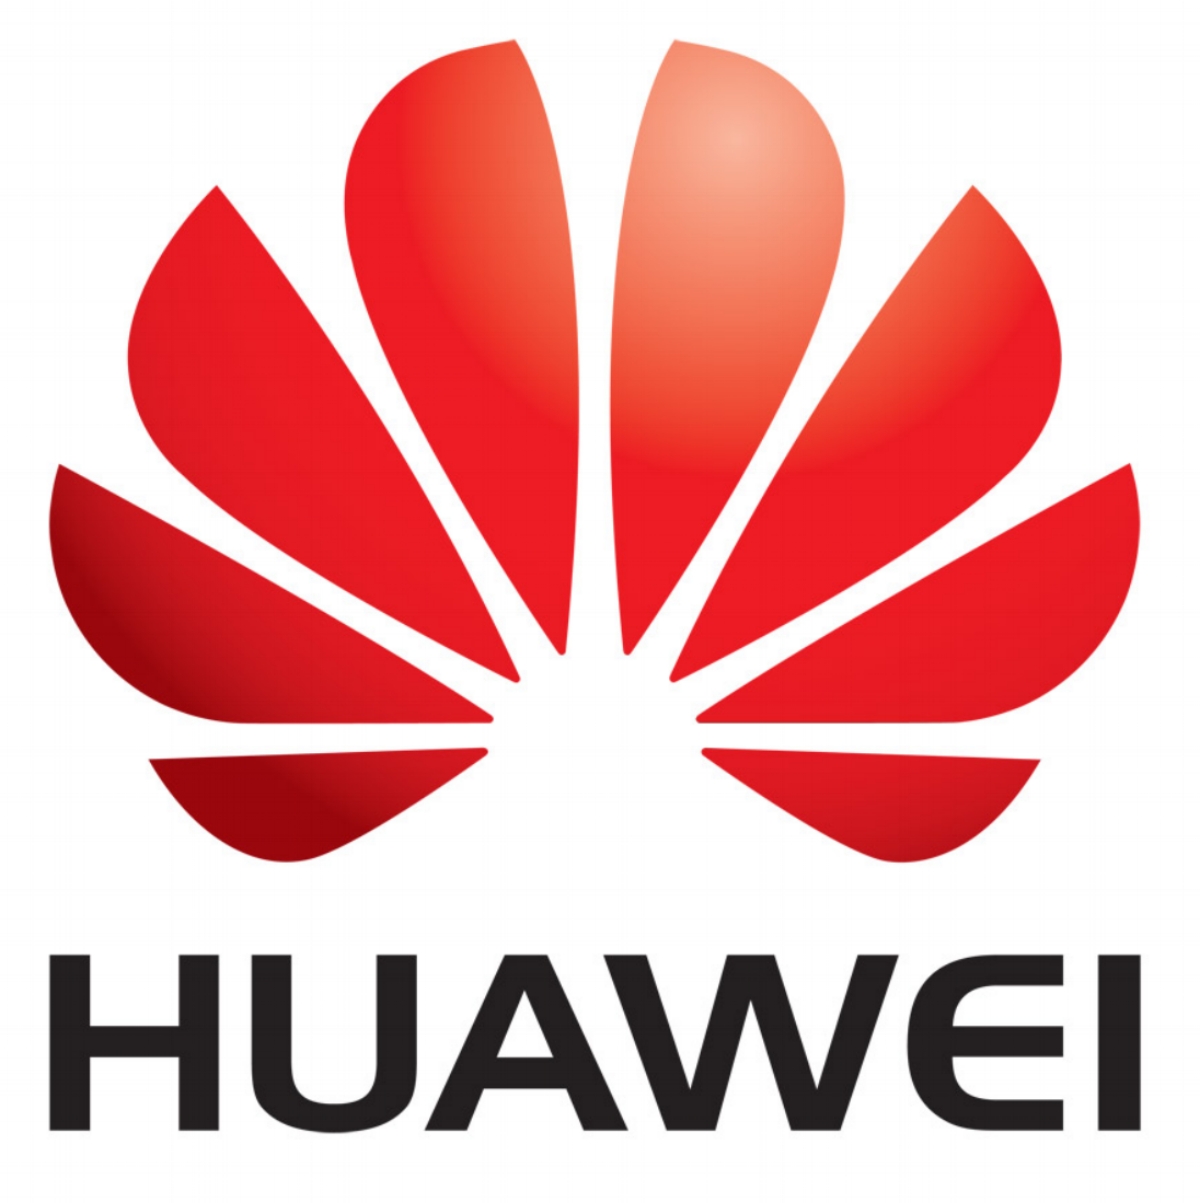 Huawei.jpg